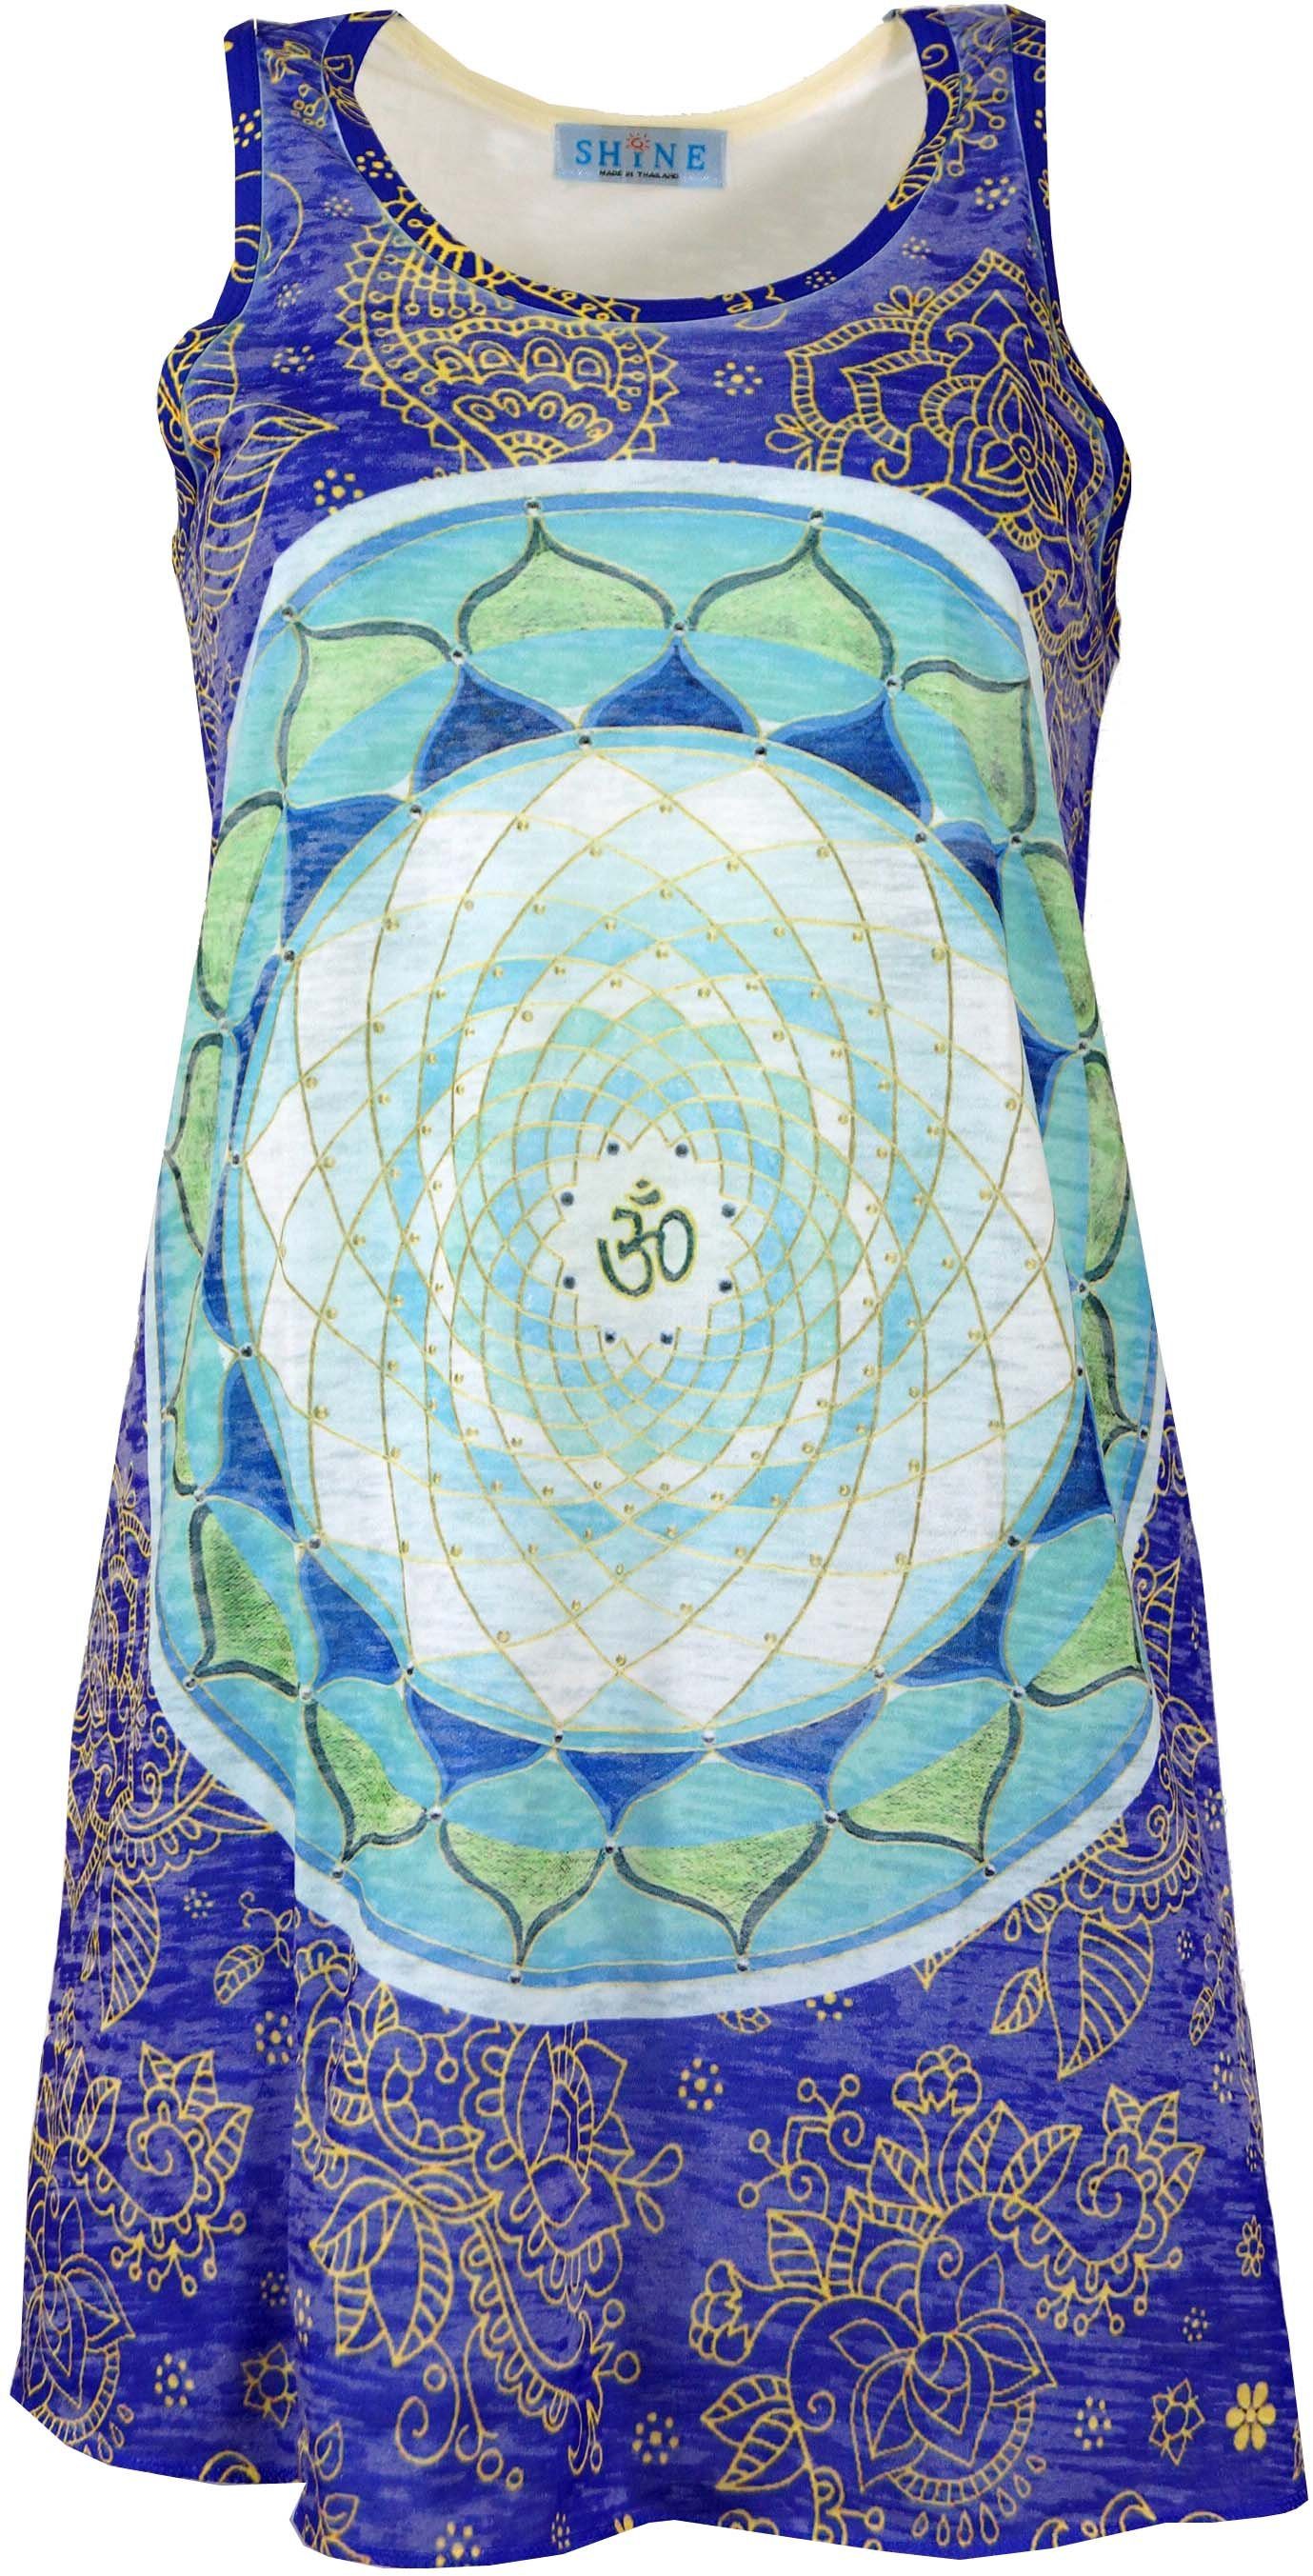 Mandala Guru-Shop alternative Longtop Psytrance Minikleid, Bekleidung Midikleid - Lotus